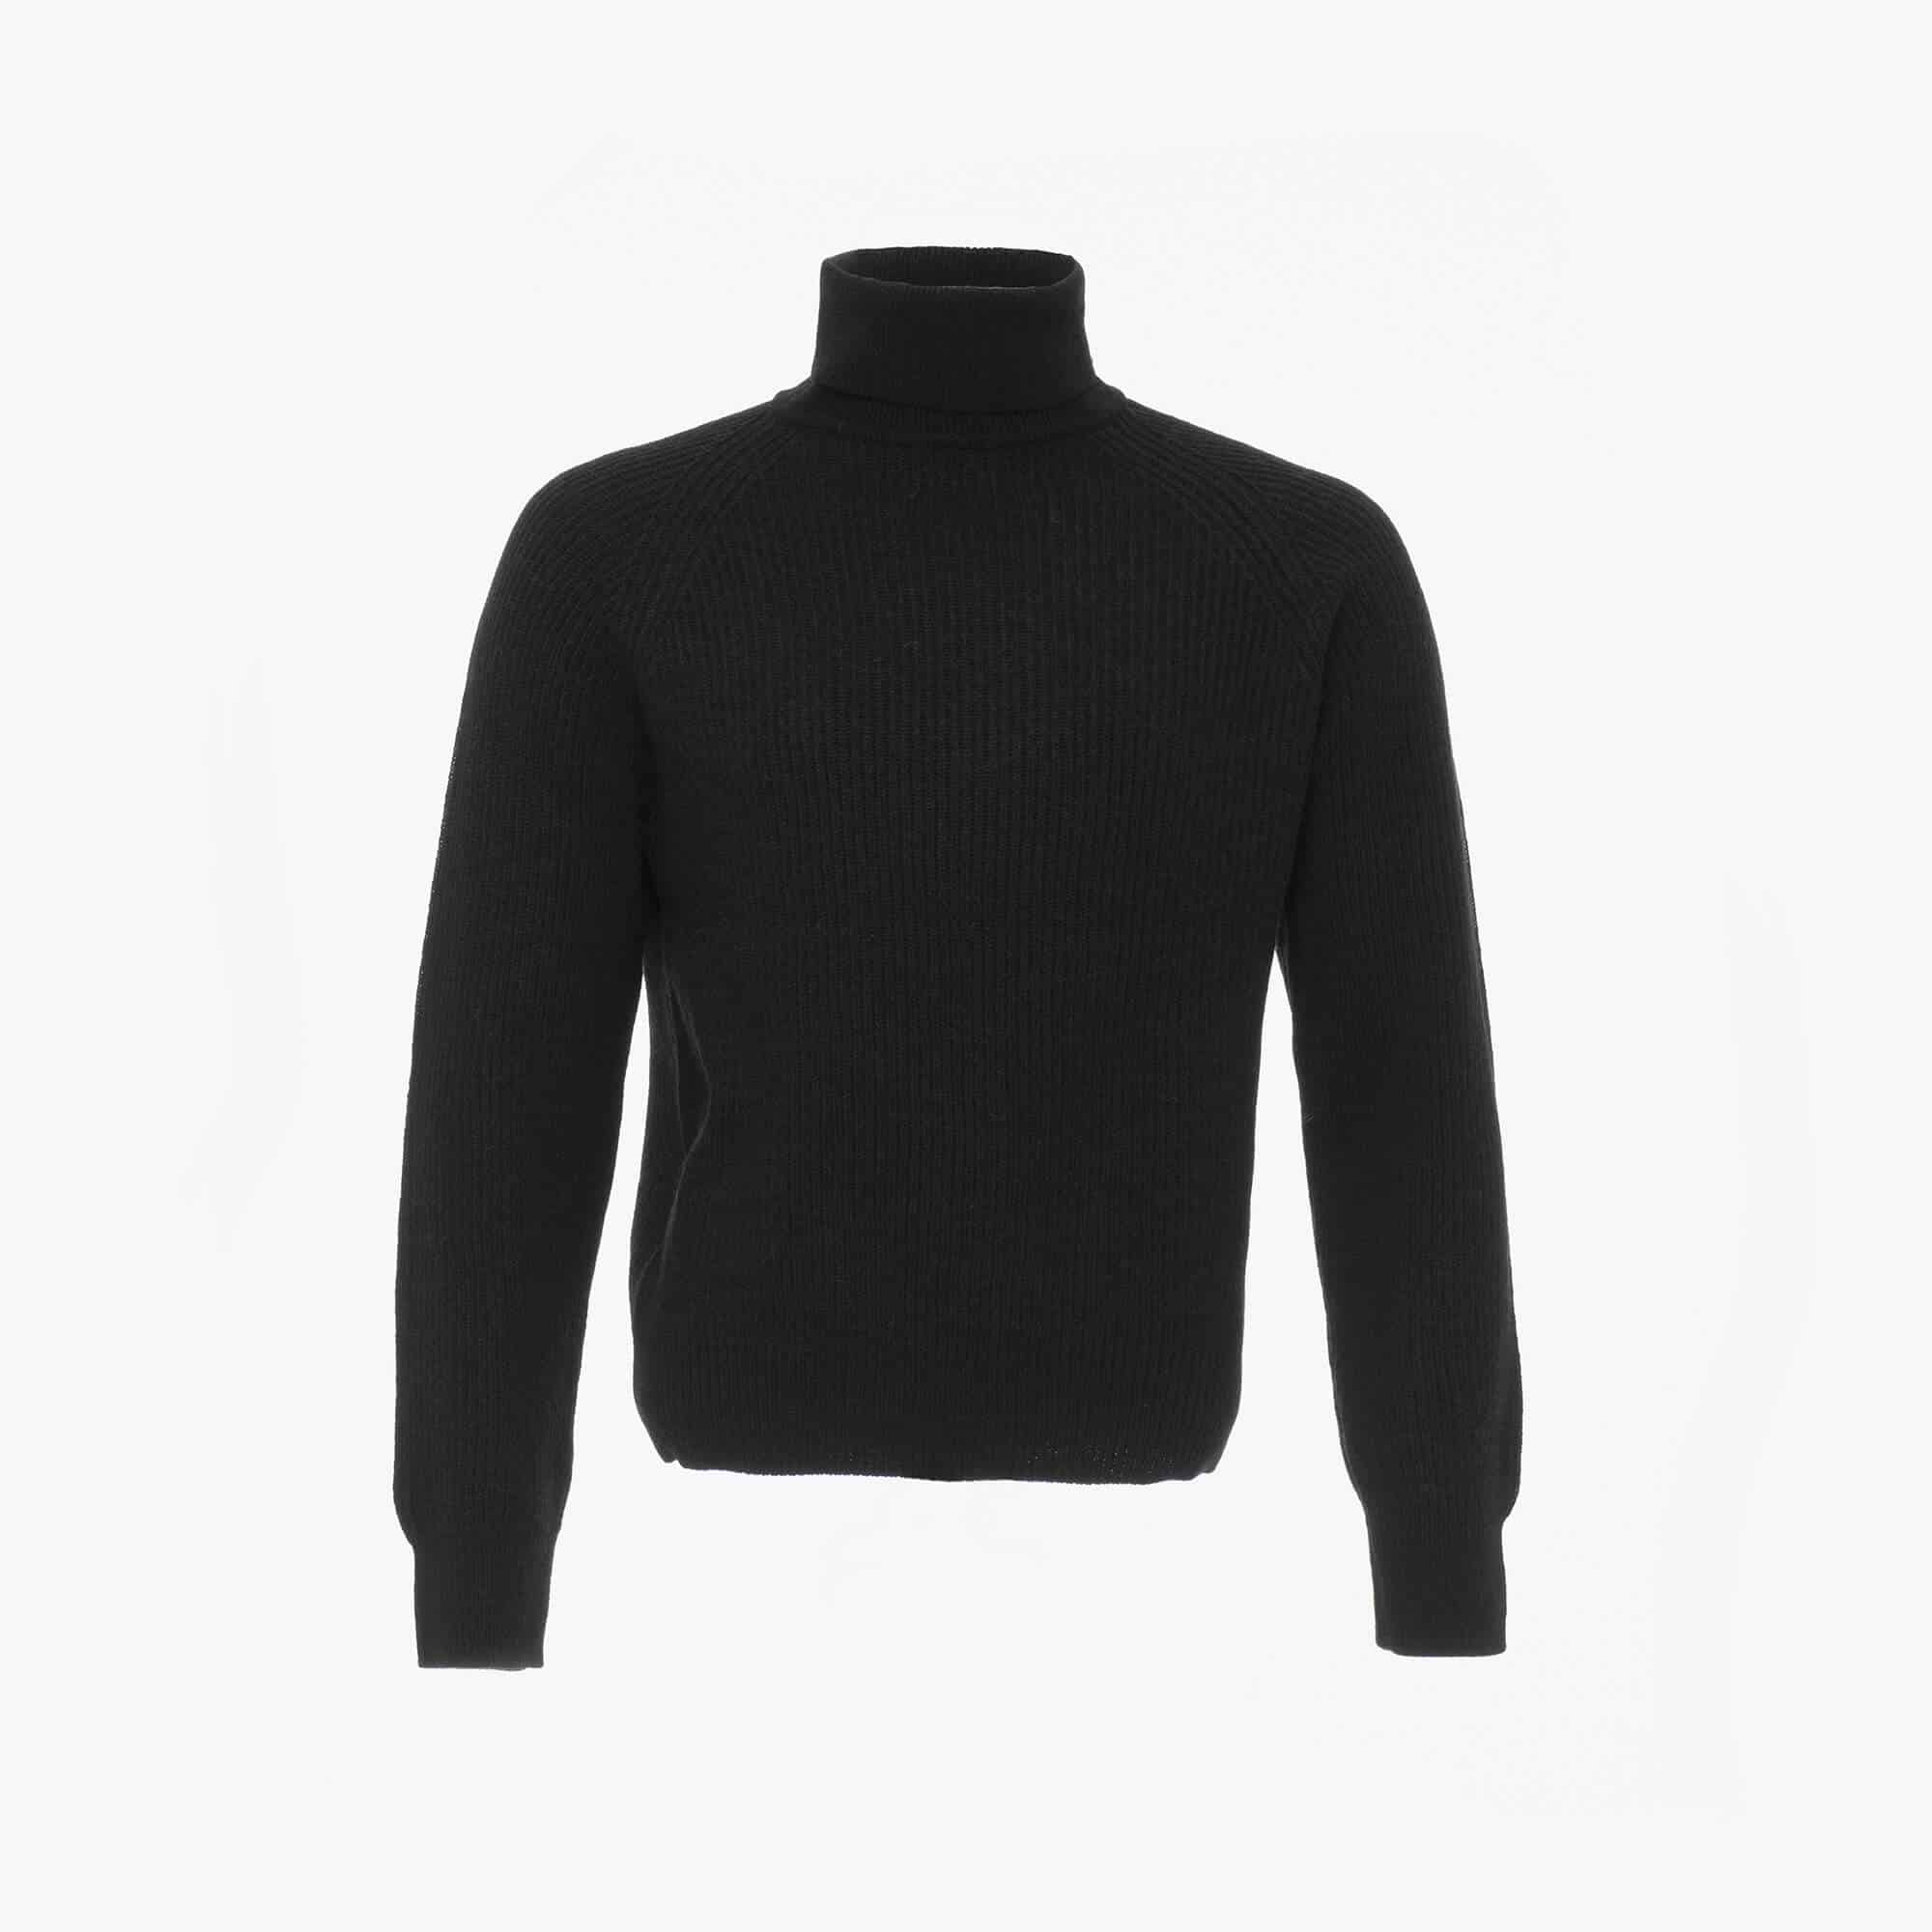 Unisex Black Turtle Neck Sweater | Issimo